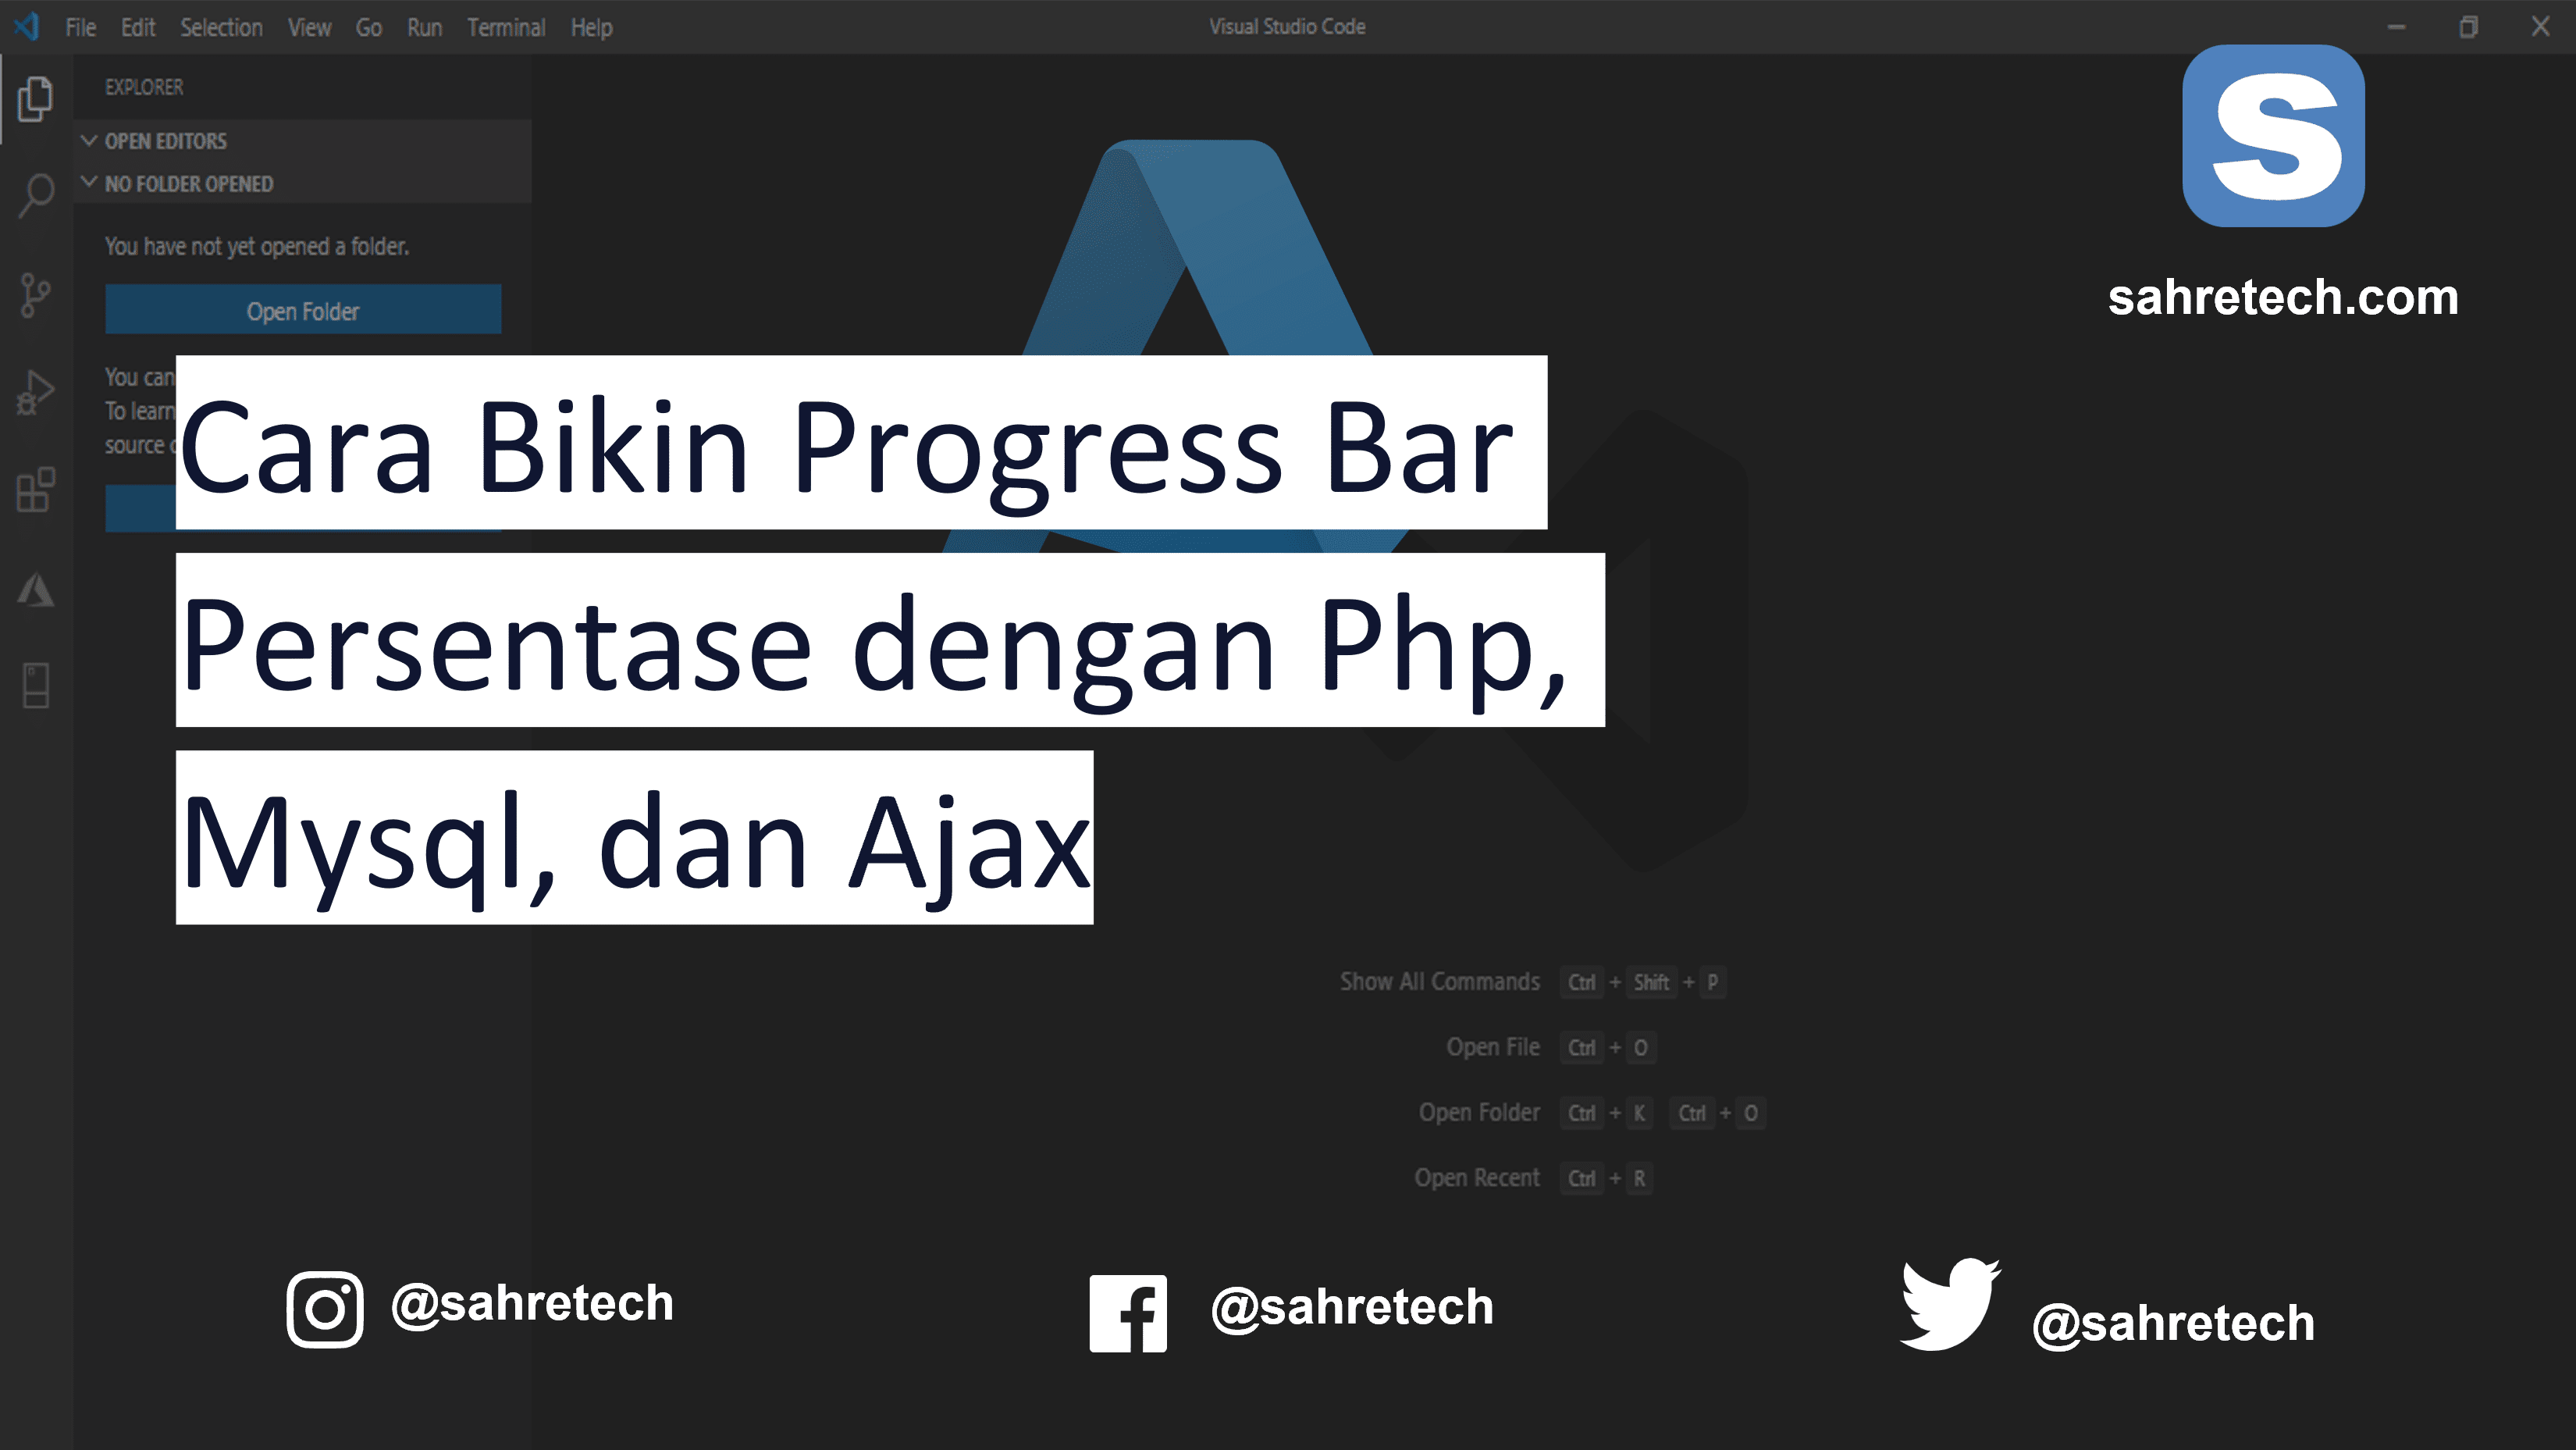 Cara Bikin Progress Bar Persentase dengan Php, Mysql, dan Ajax